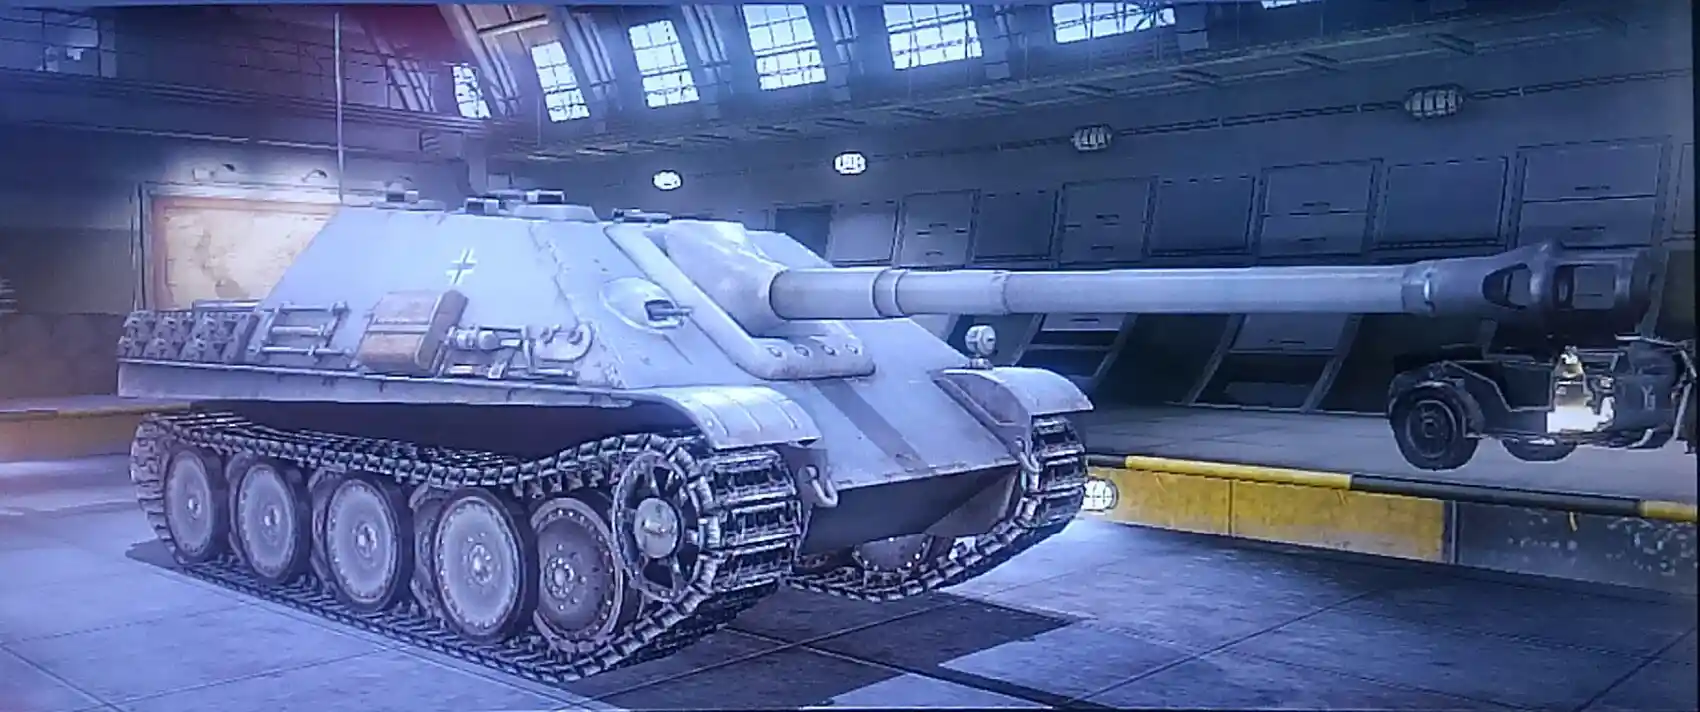 6_Jagdpanther_PaK_45.jpg